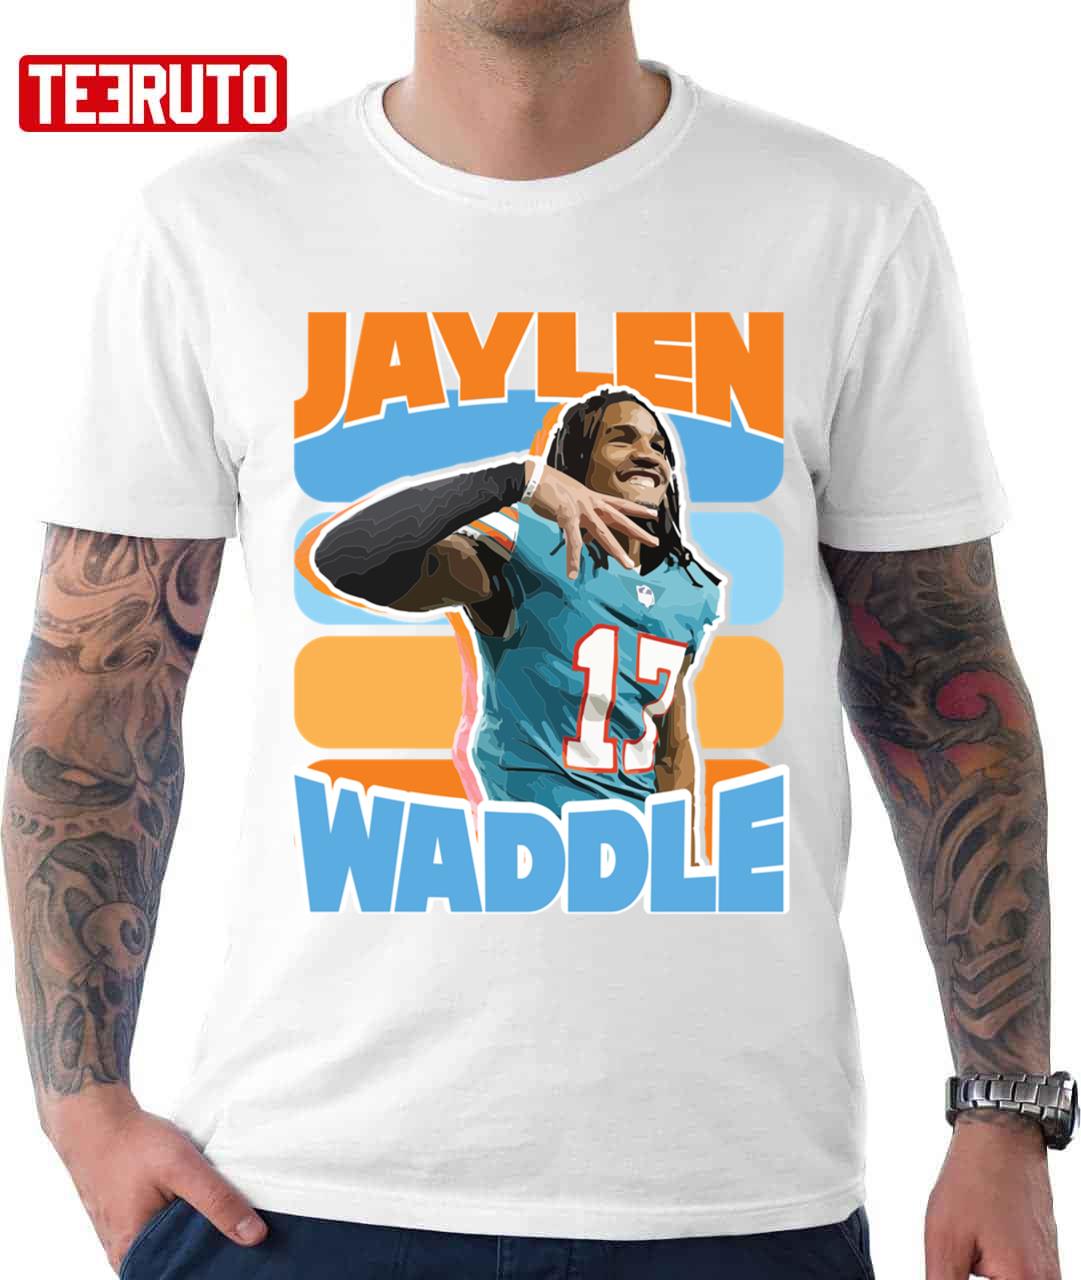 jaylen waddle t shirts